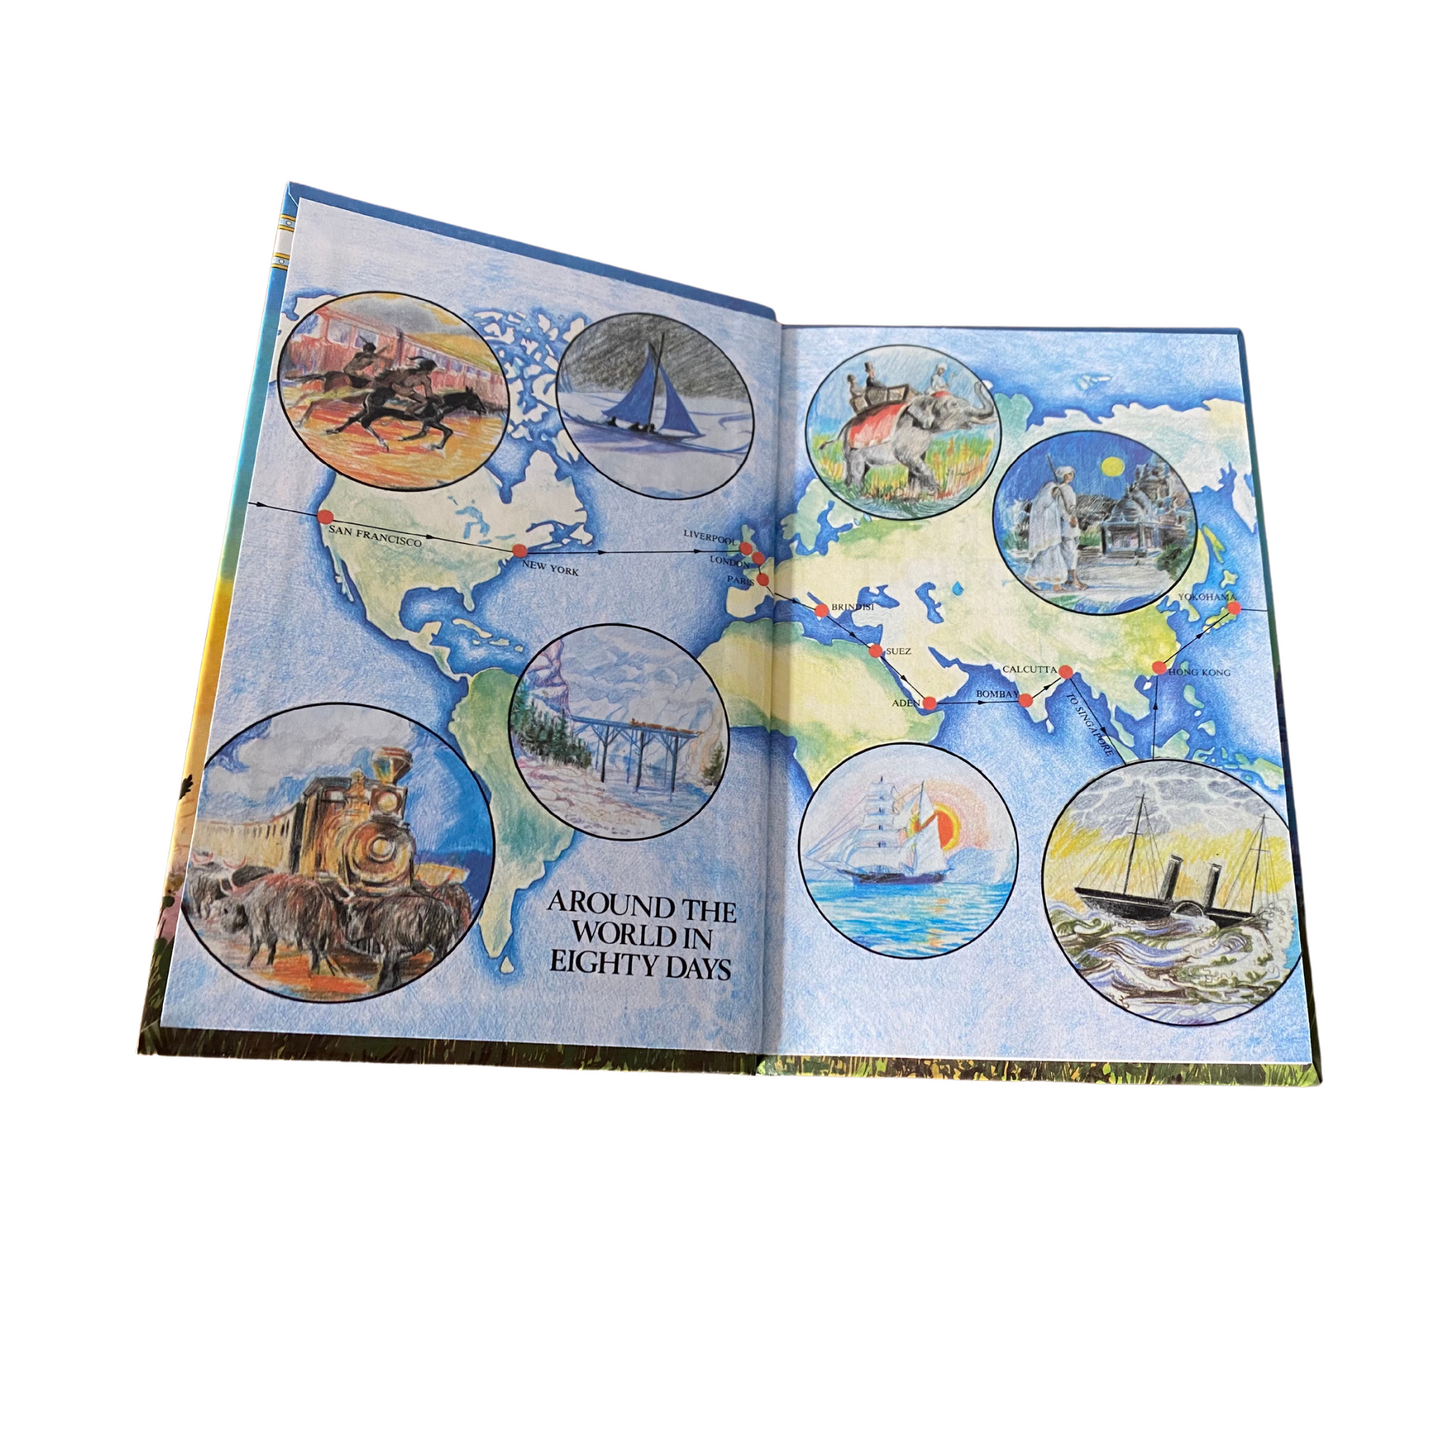 Around the World in 80 Days : Ladybird book Children’s Classics. Series 740. Nostalgic gift idea